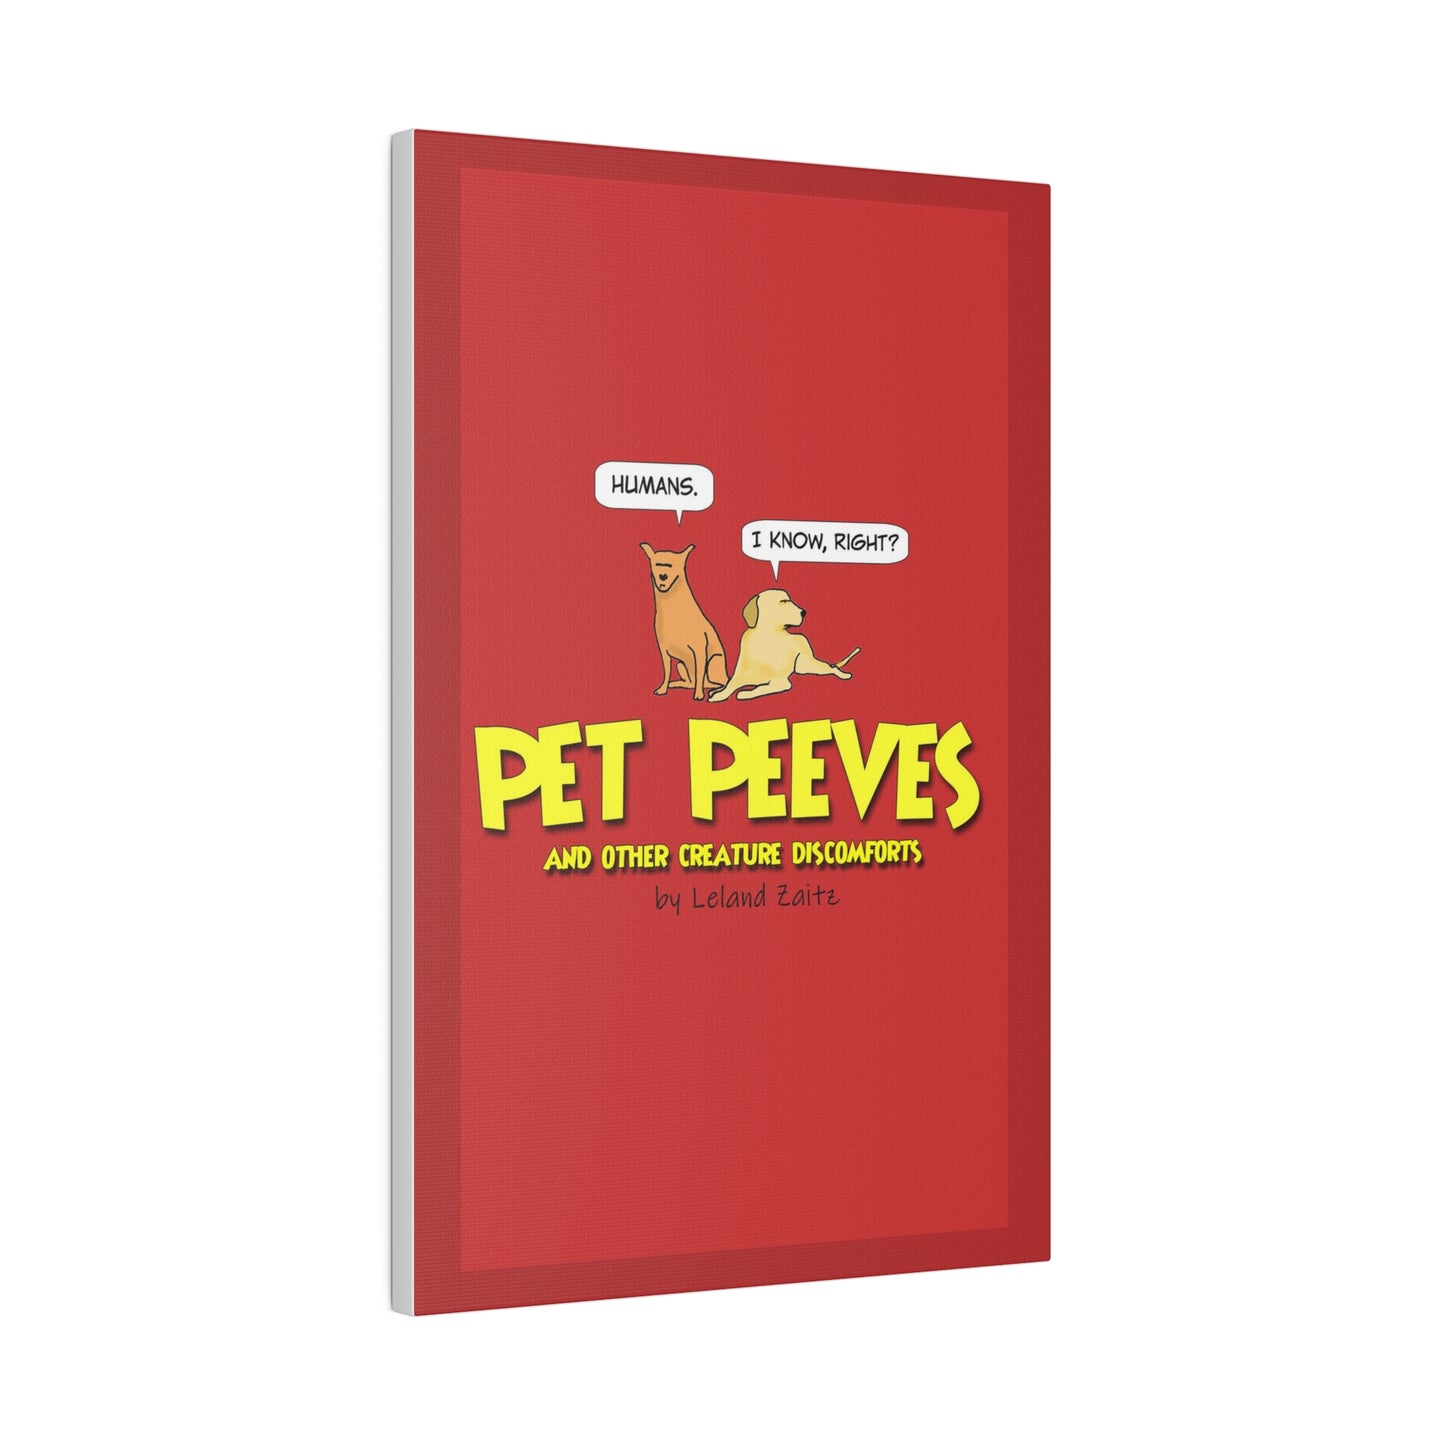 Pet Peeves - Canvas